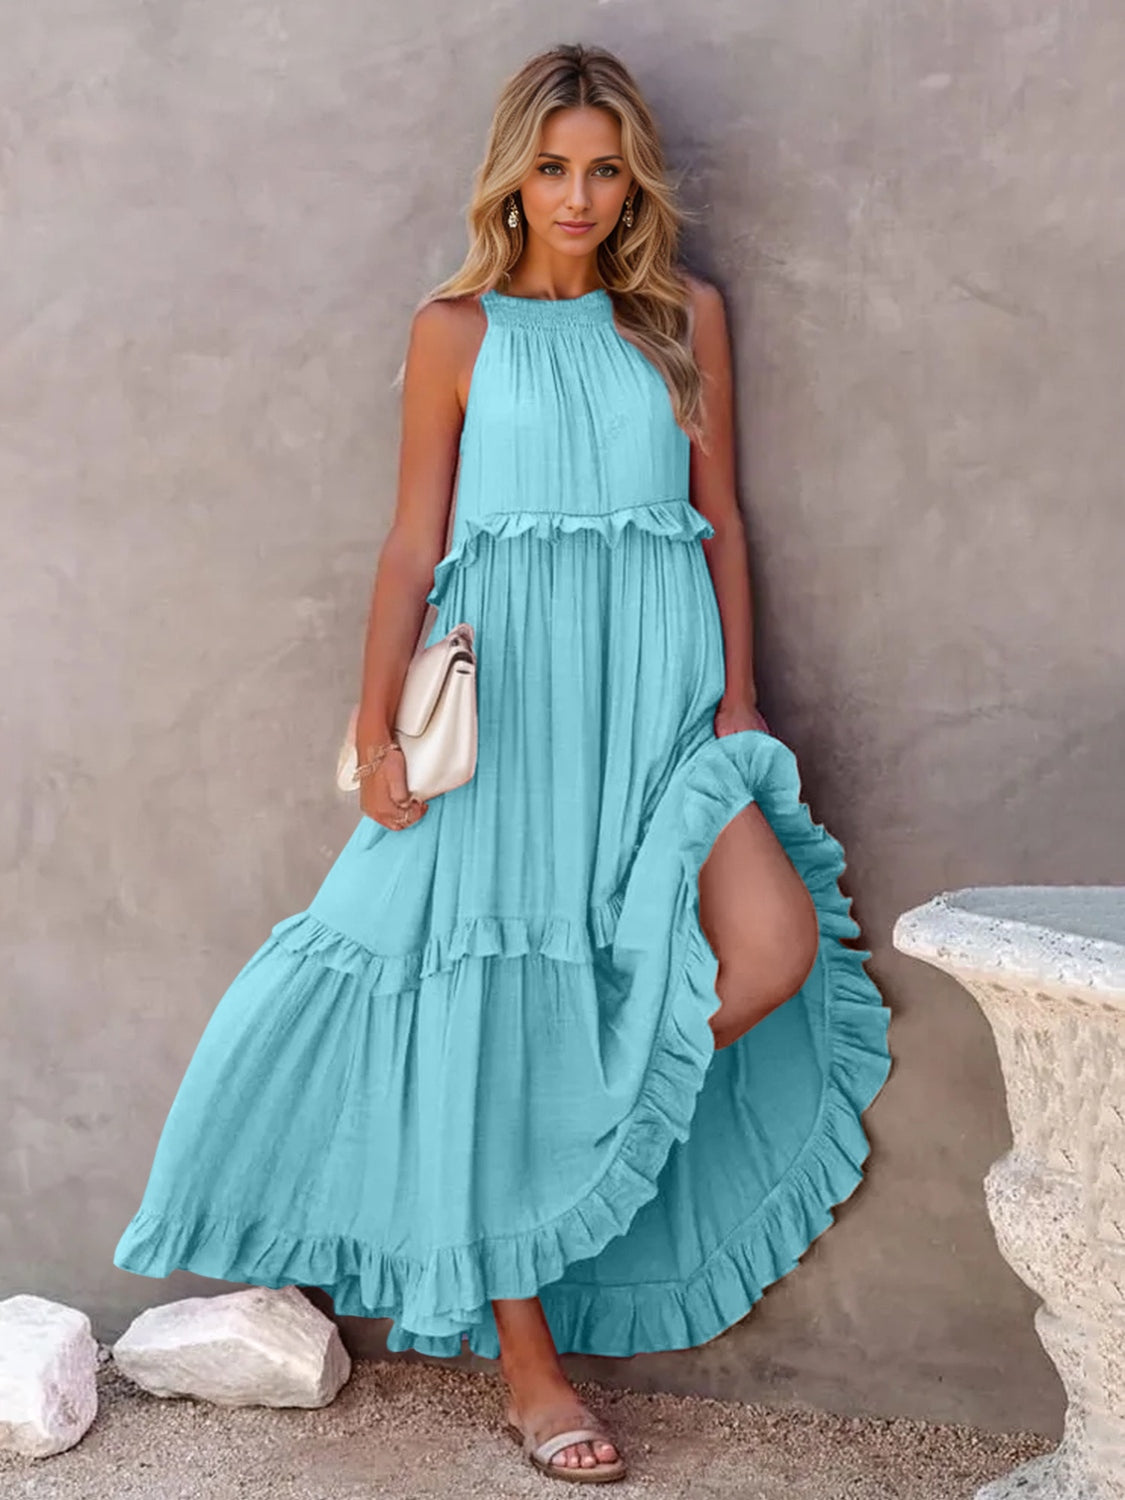 TEEK - Ruffled Sleeveless Tiered Pocketed Dress DRESS TEEK Trend Sky Blue S 